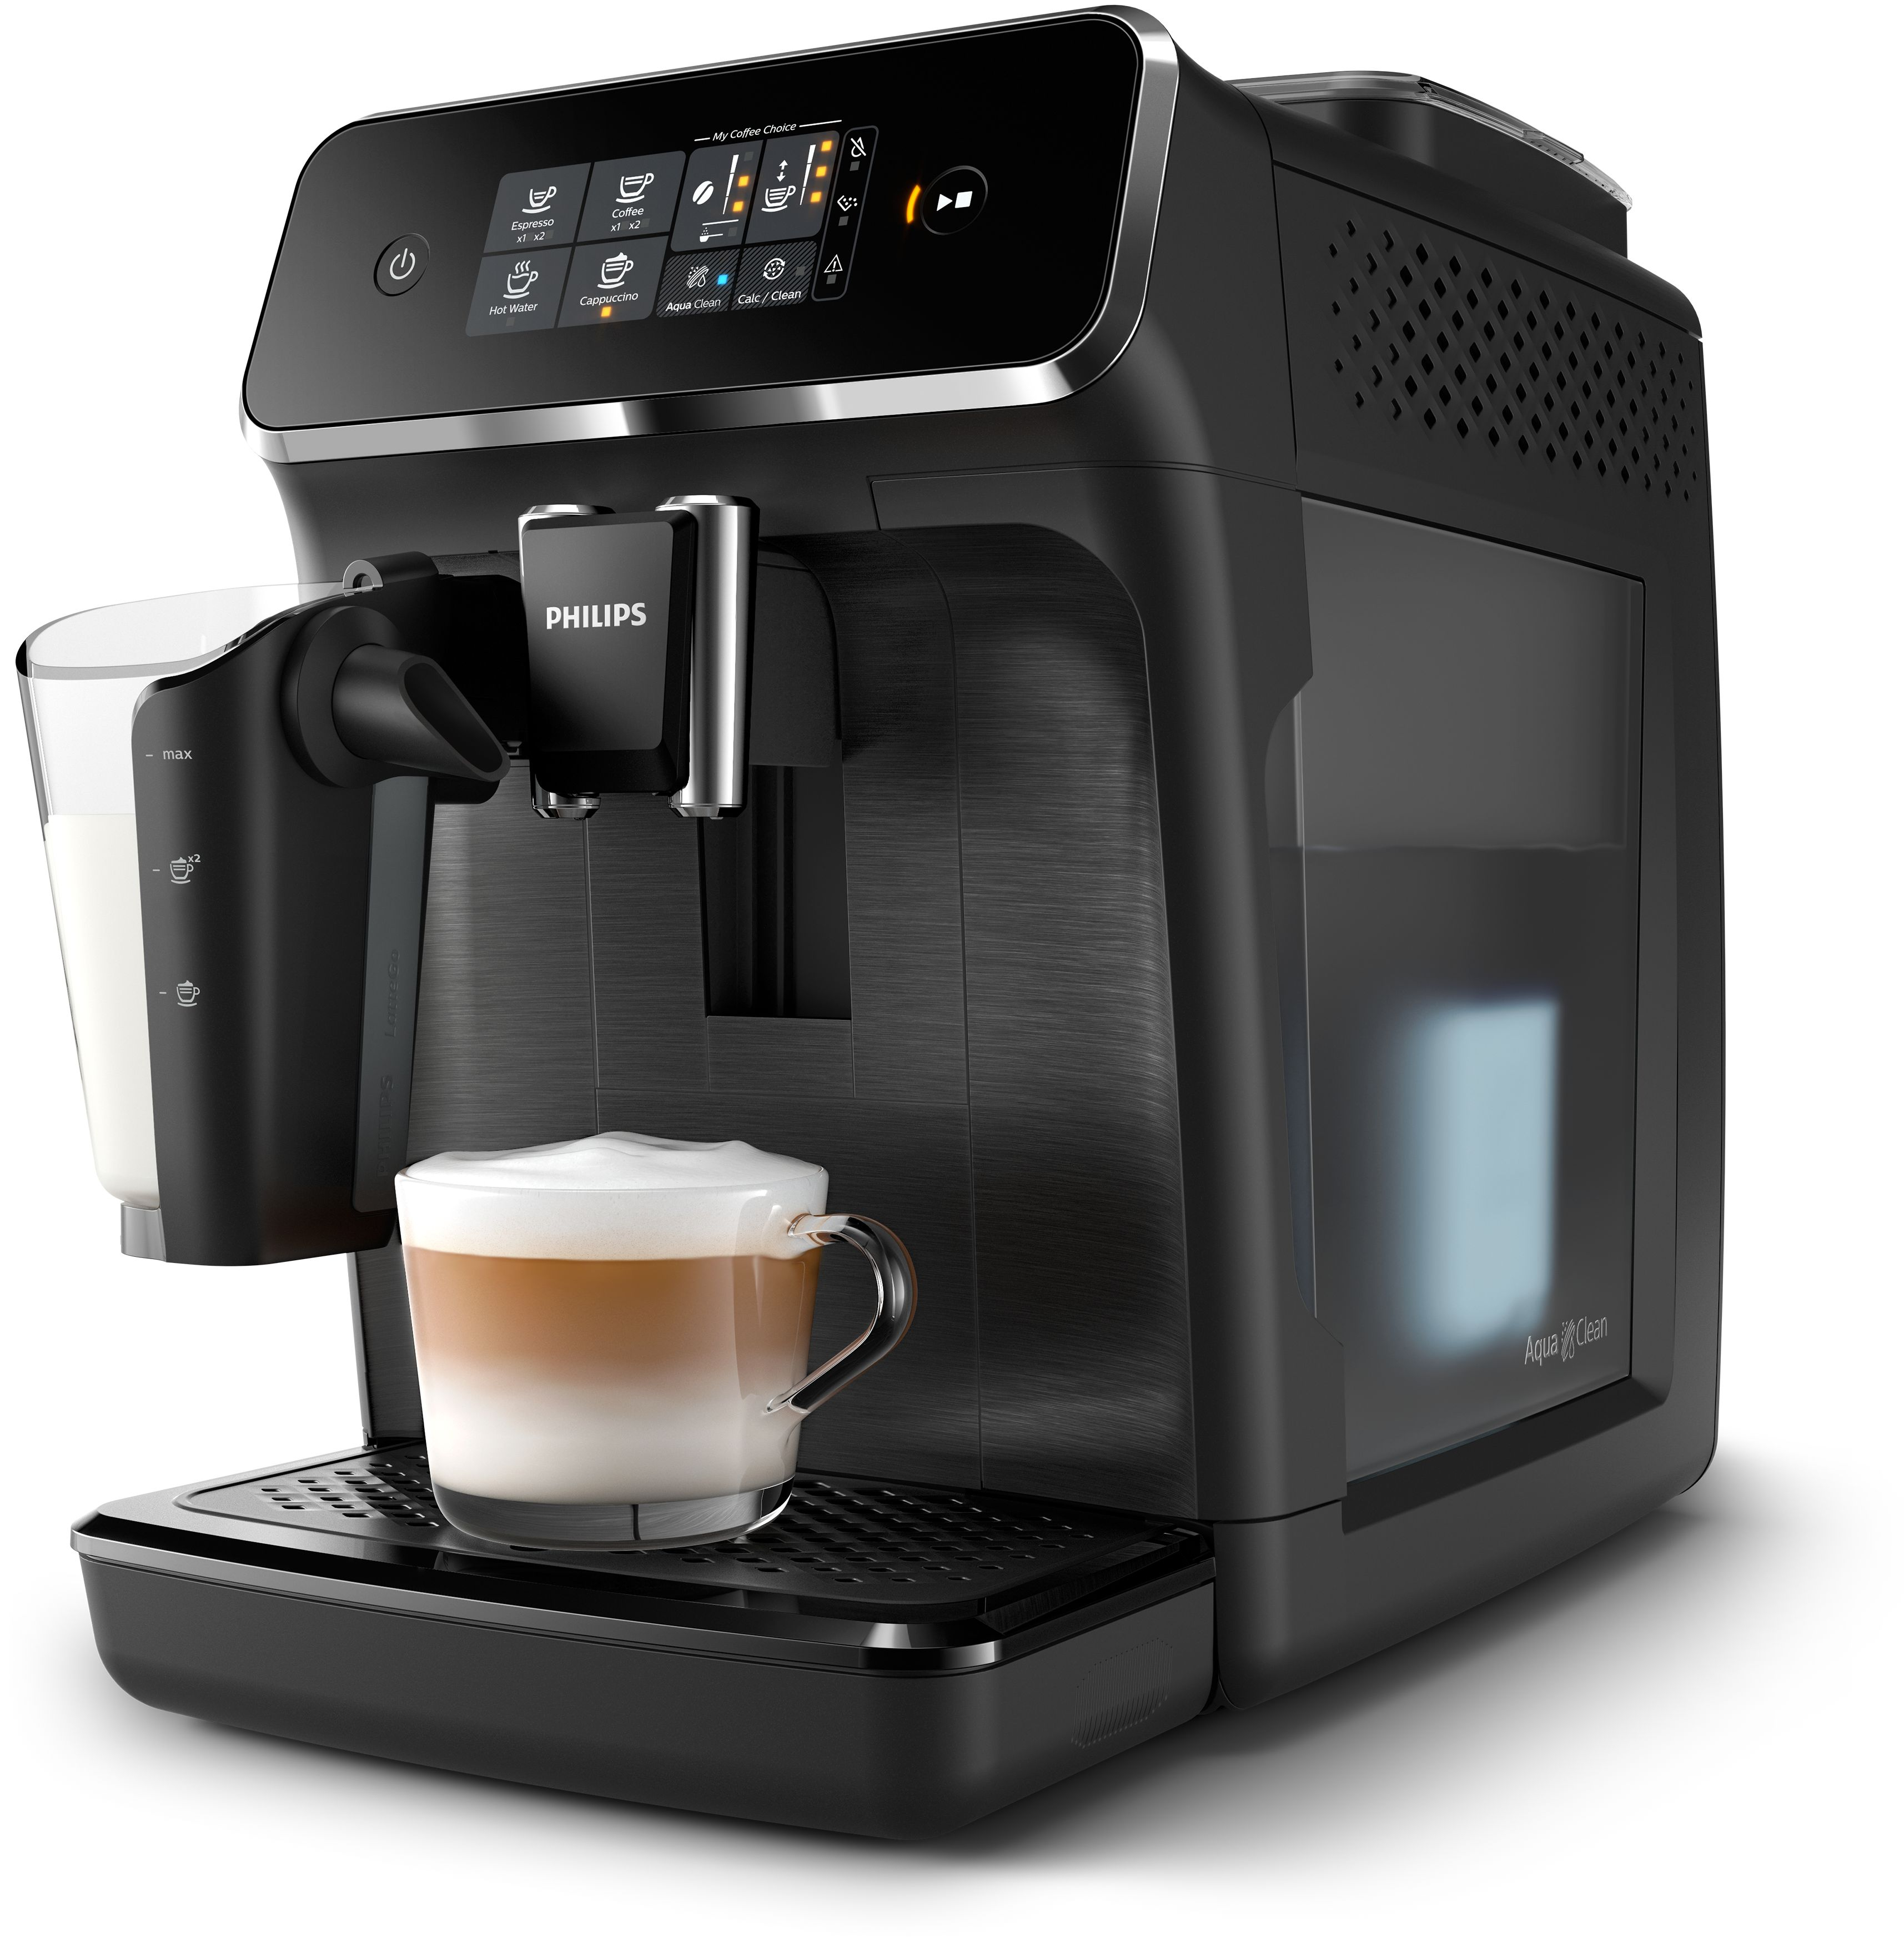 Philips EP2230/14 coffee maker